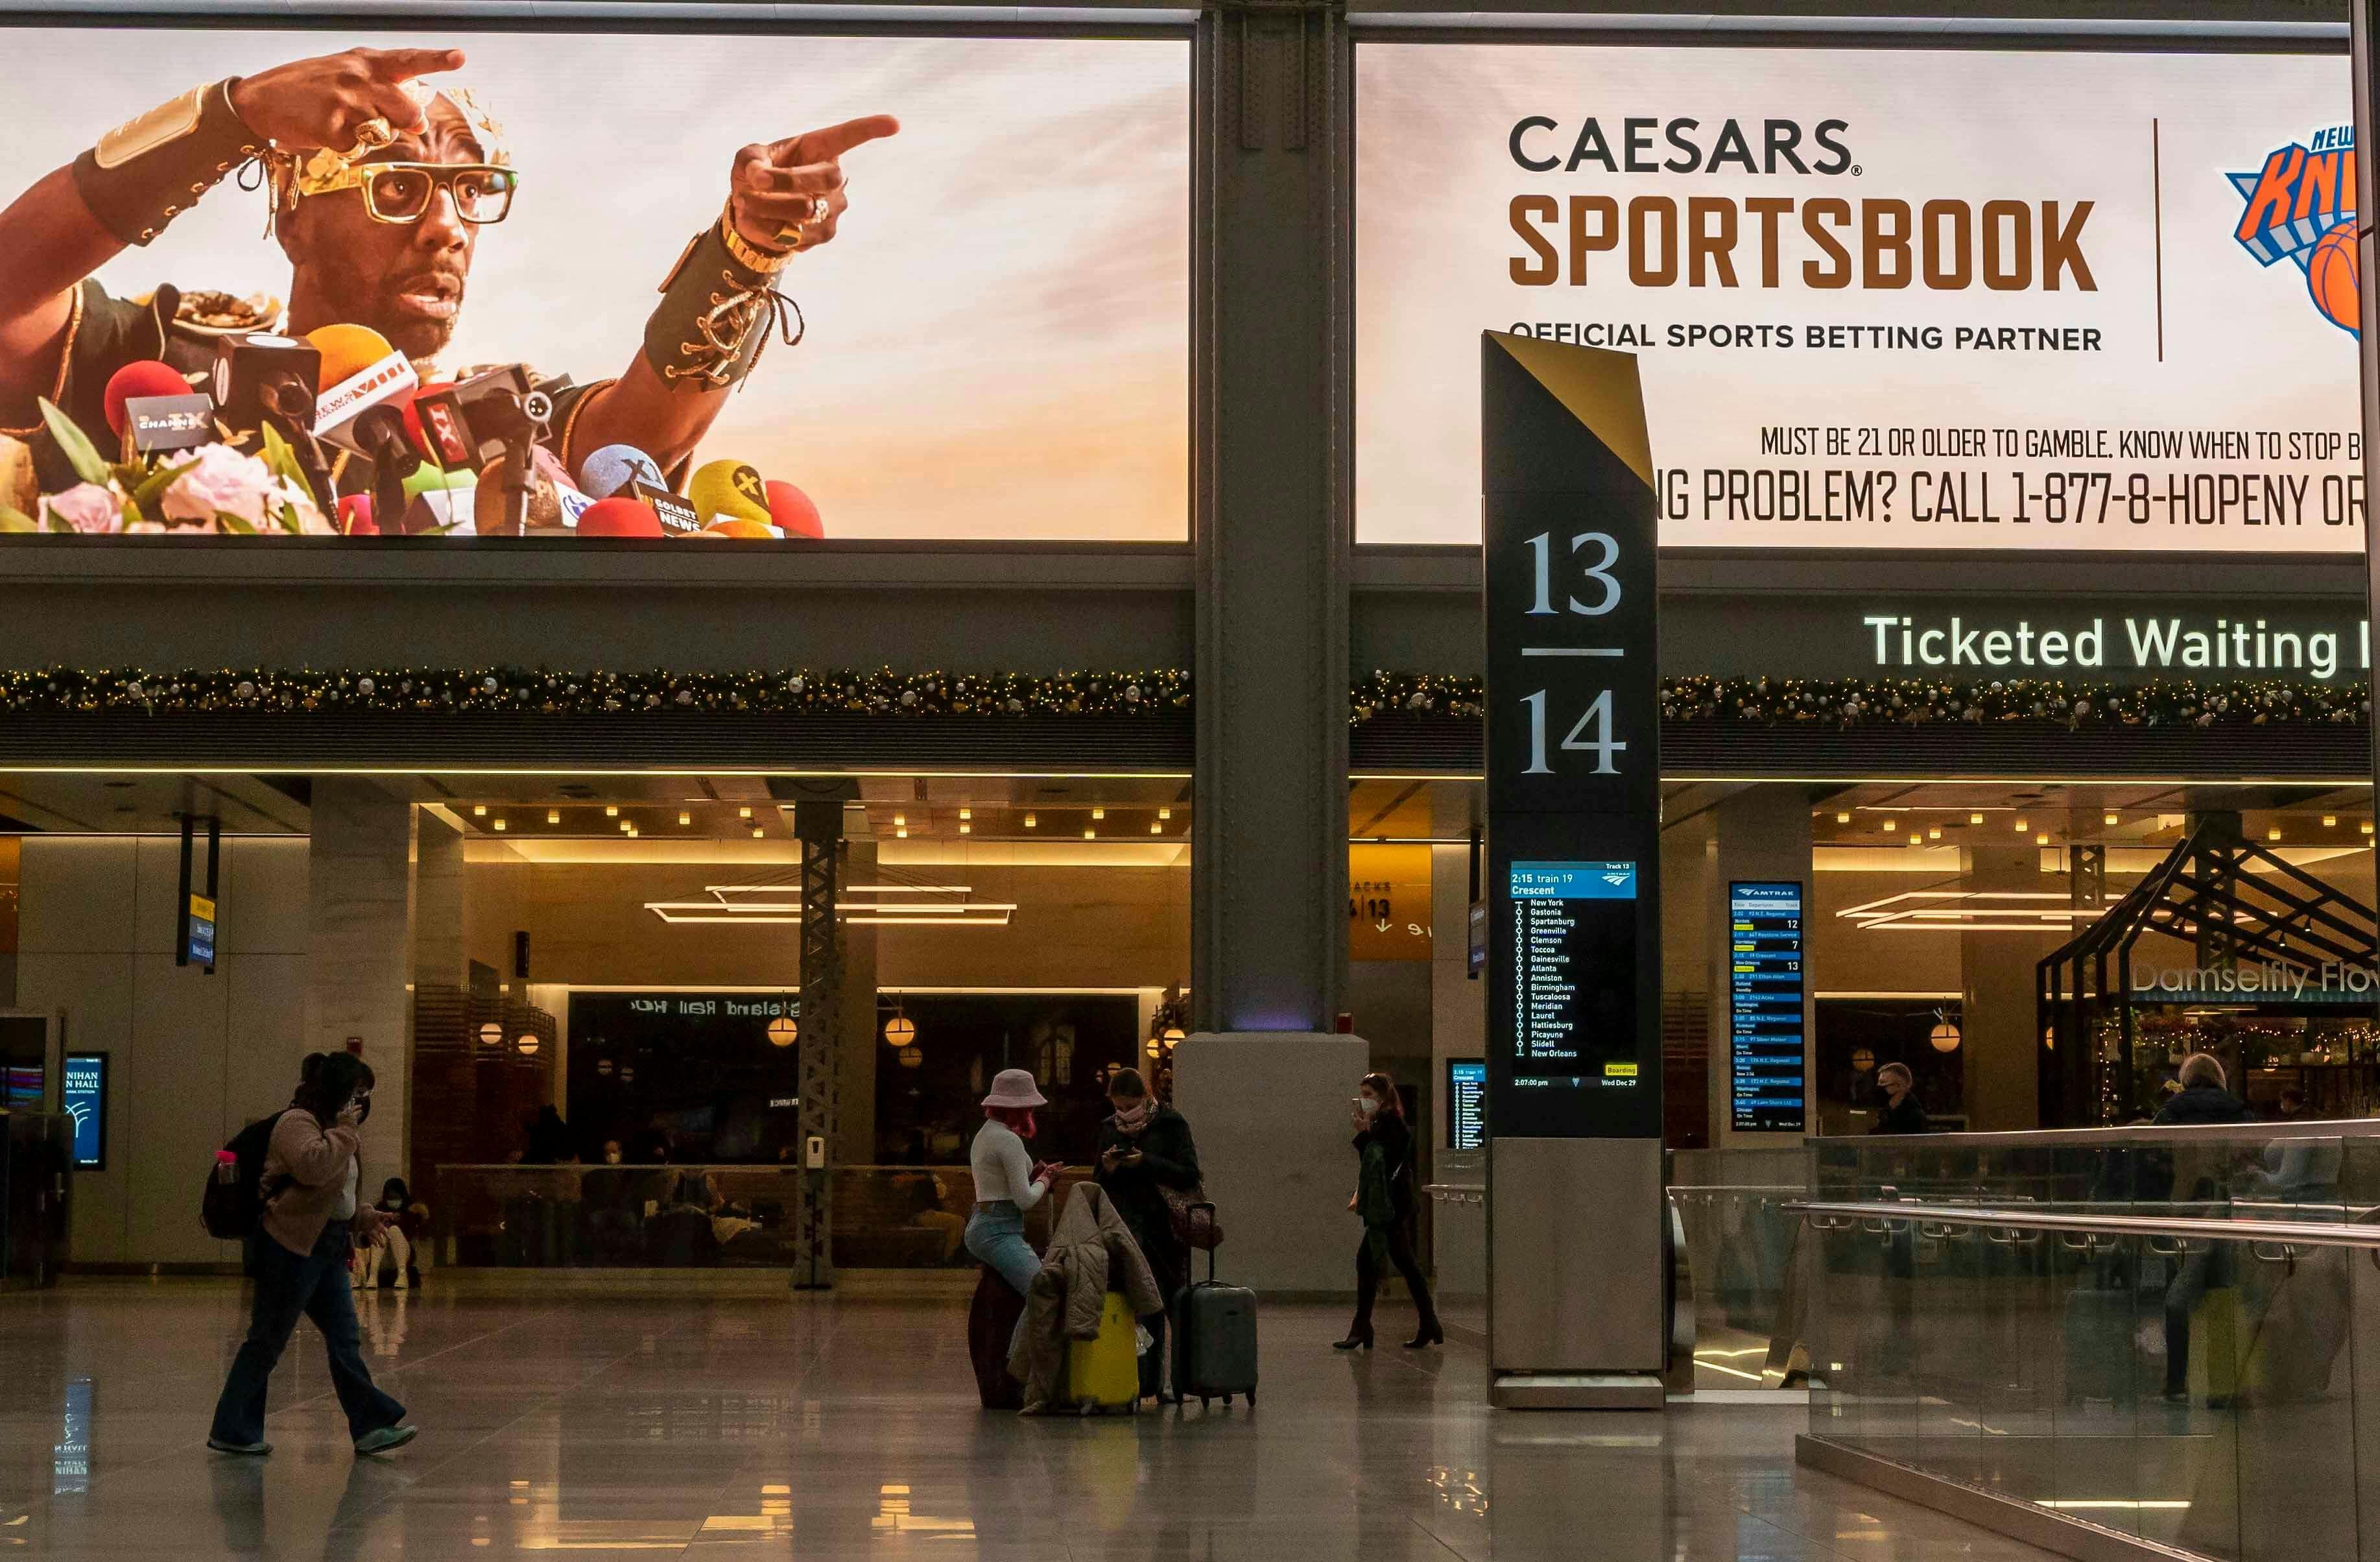 Caesars Sportsbook Advertisement NYC